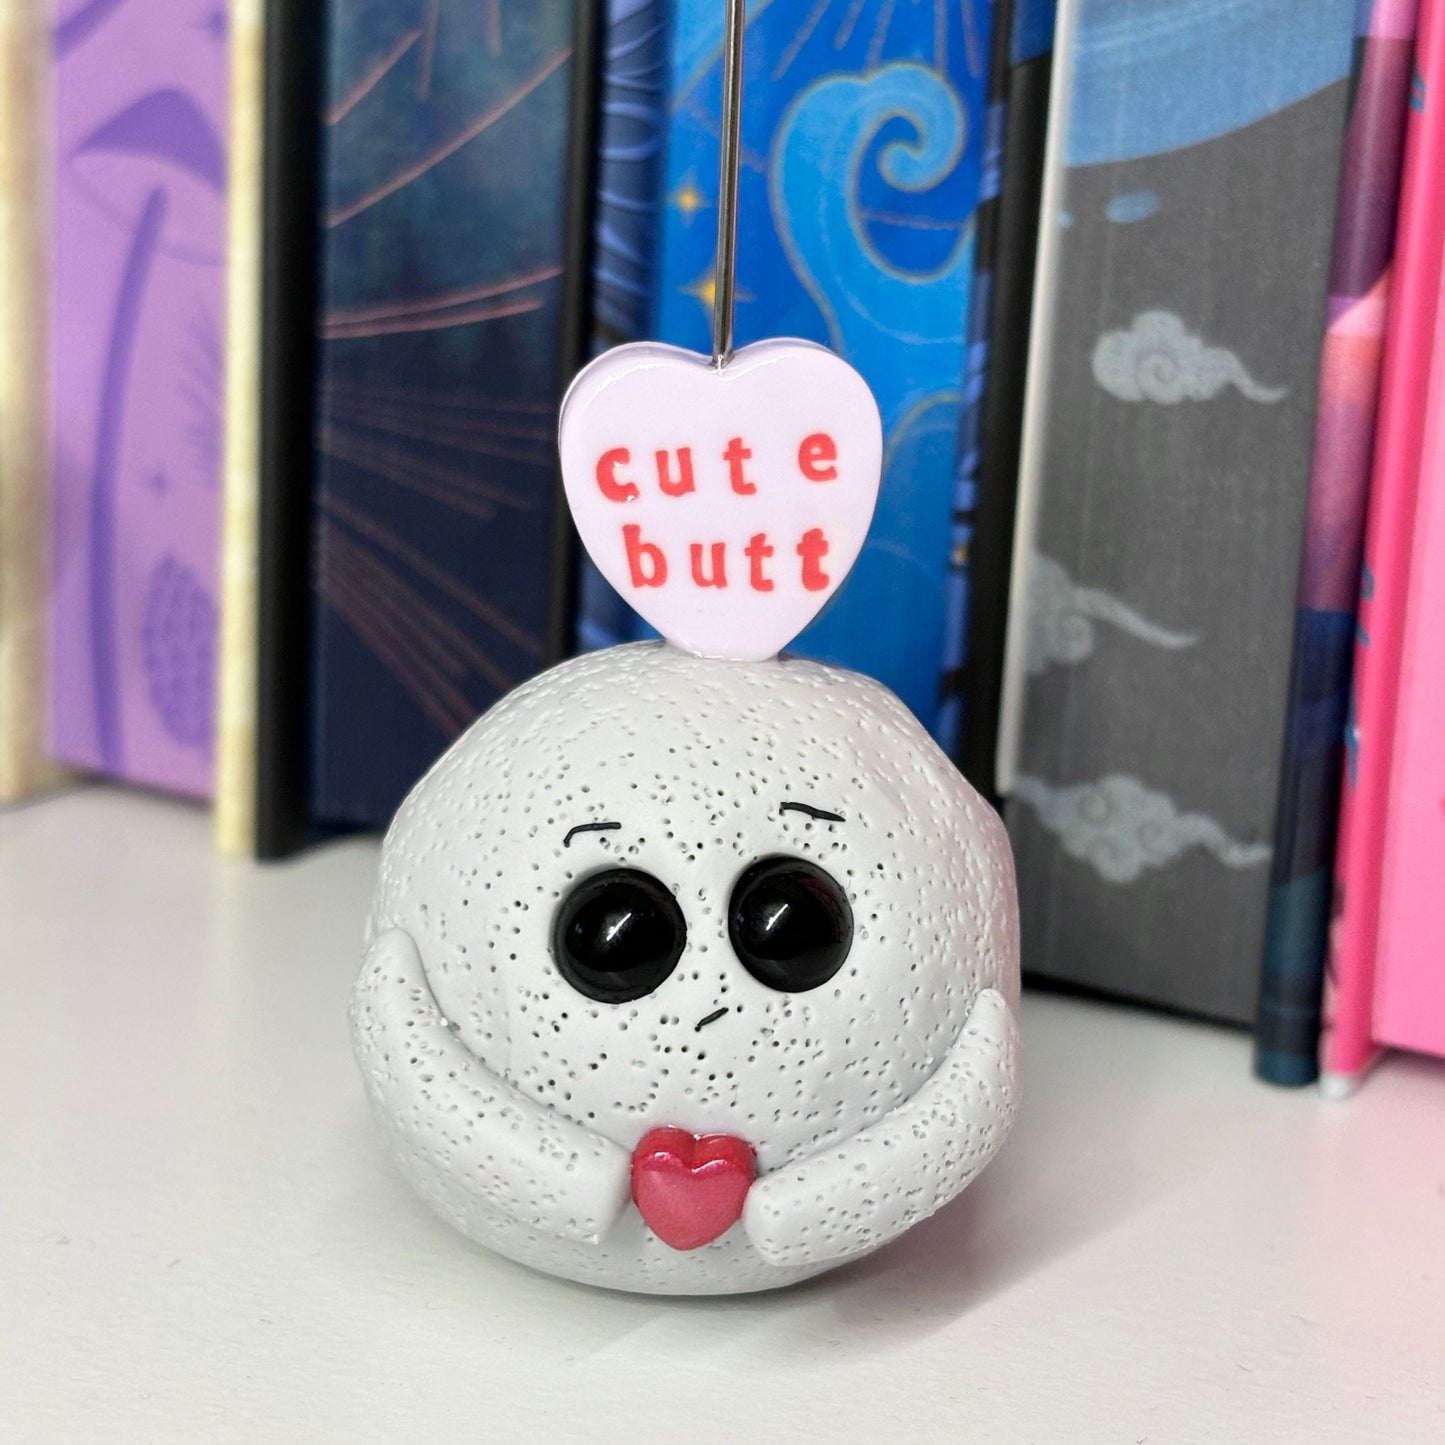 'Cute Butt' Love Heart Moonling Photo Holders